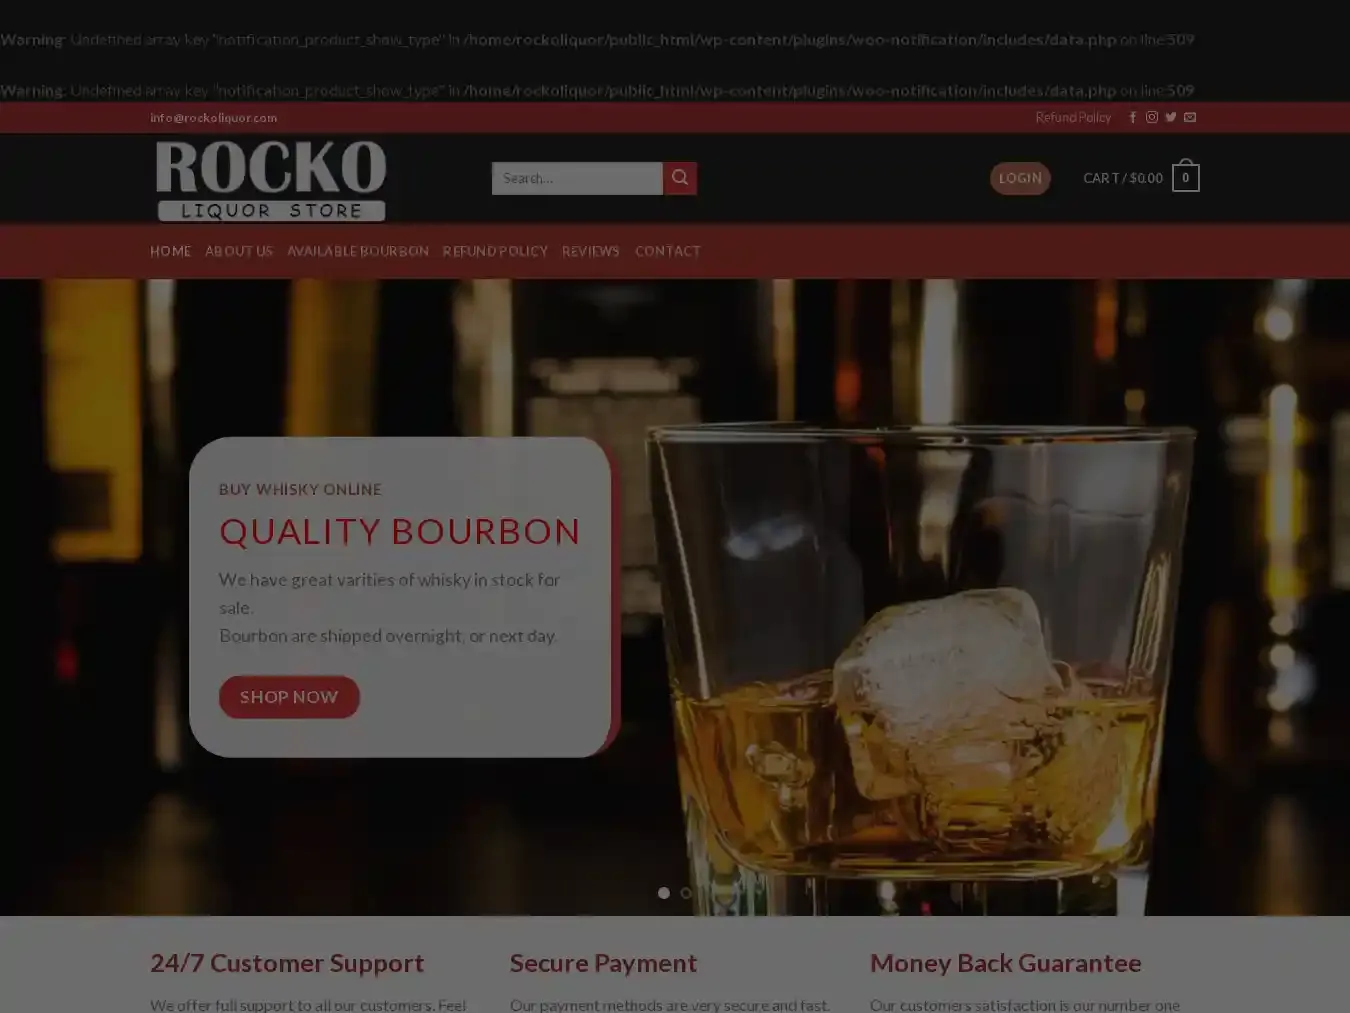 Rockoliquor.com Fraudulent Whisky website.